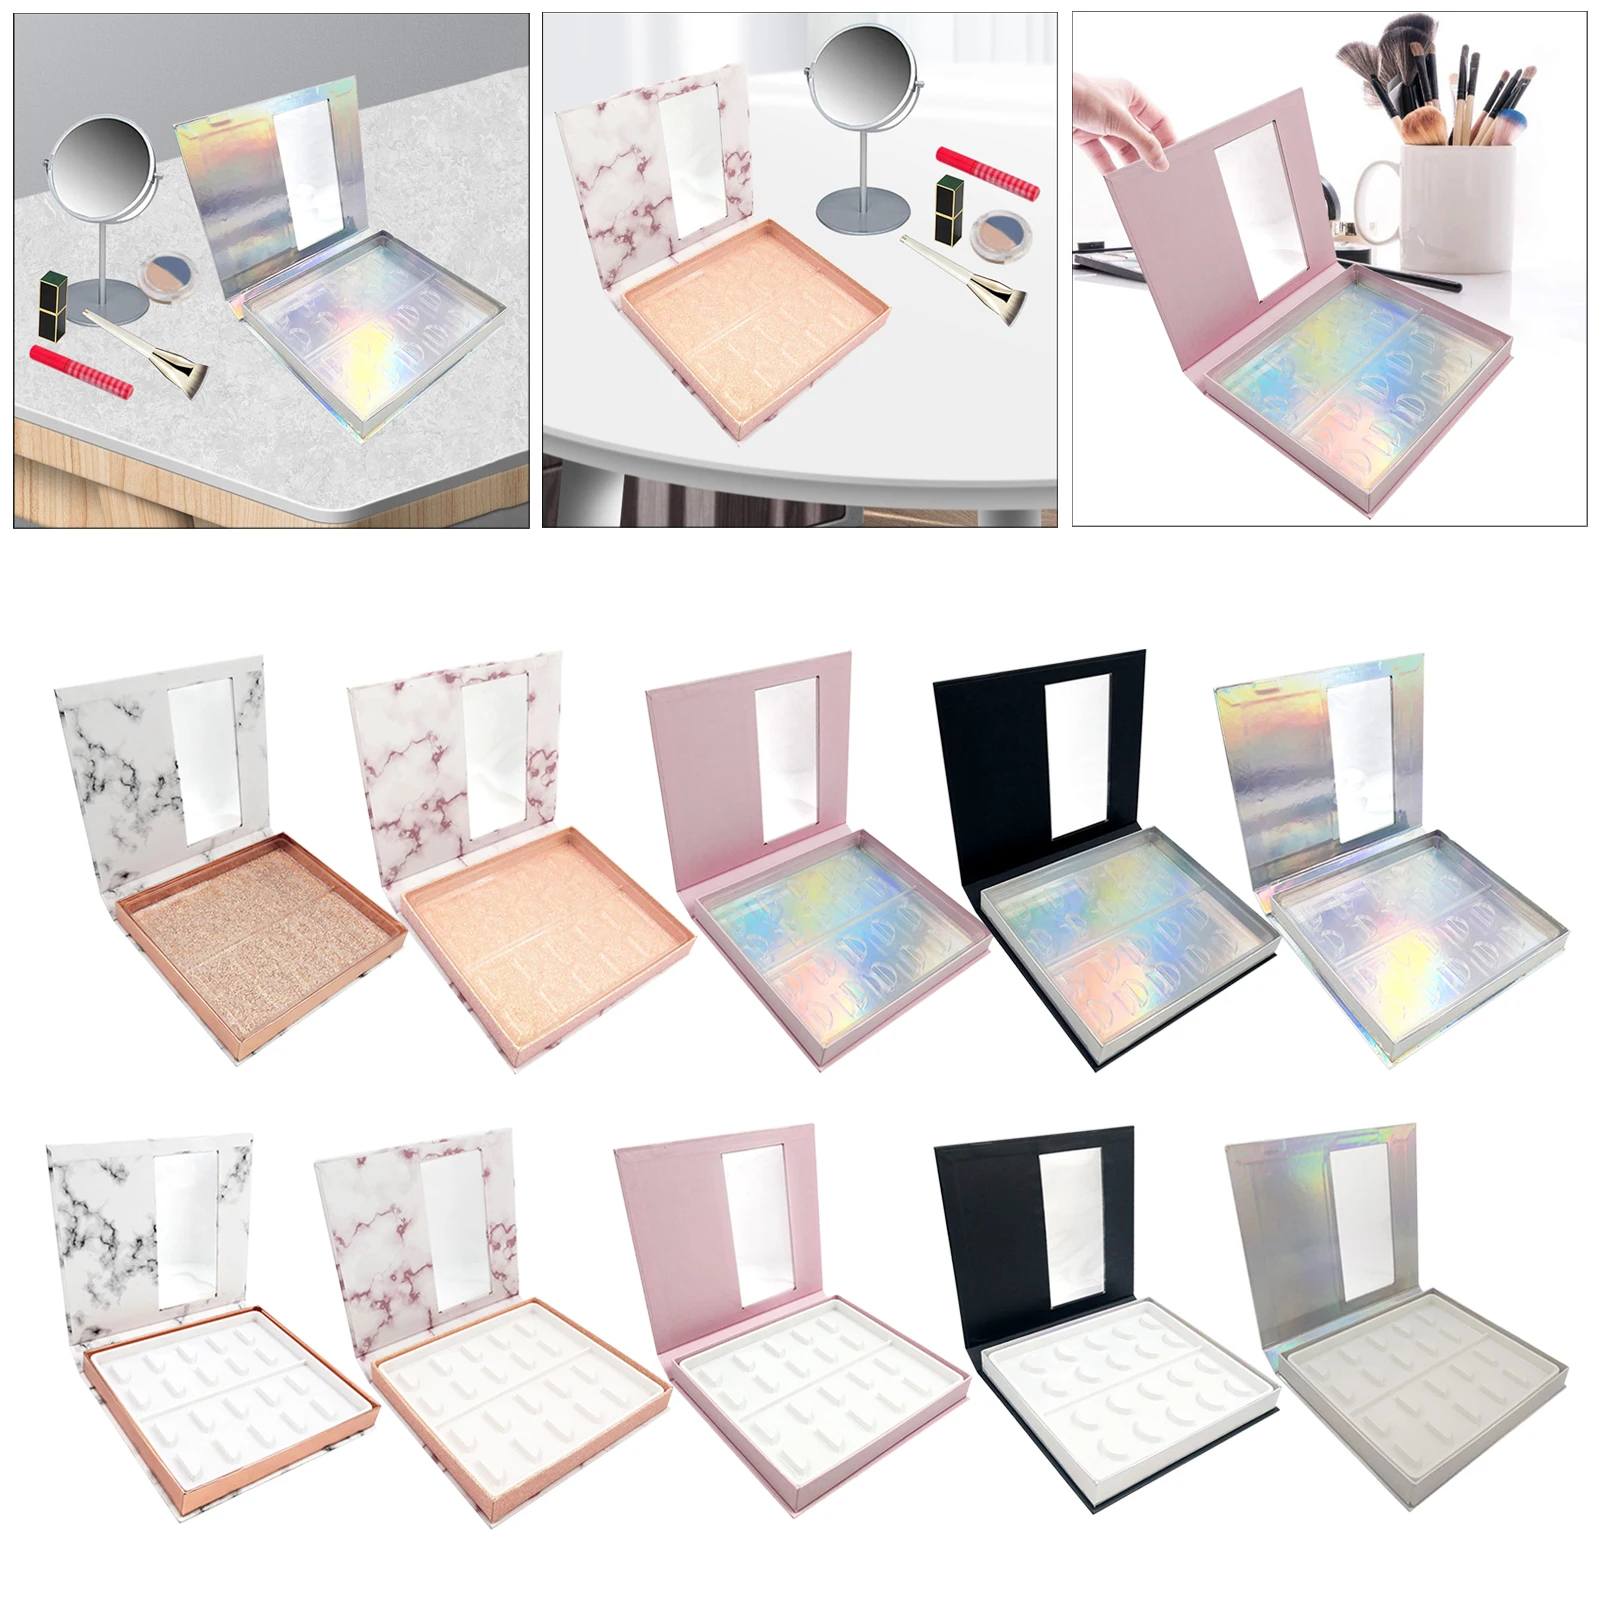 Portable False Lash Book Storage 10 Pairs Lahses Holder Container Organizer Paper Makeup Display Box Travel